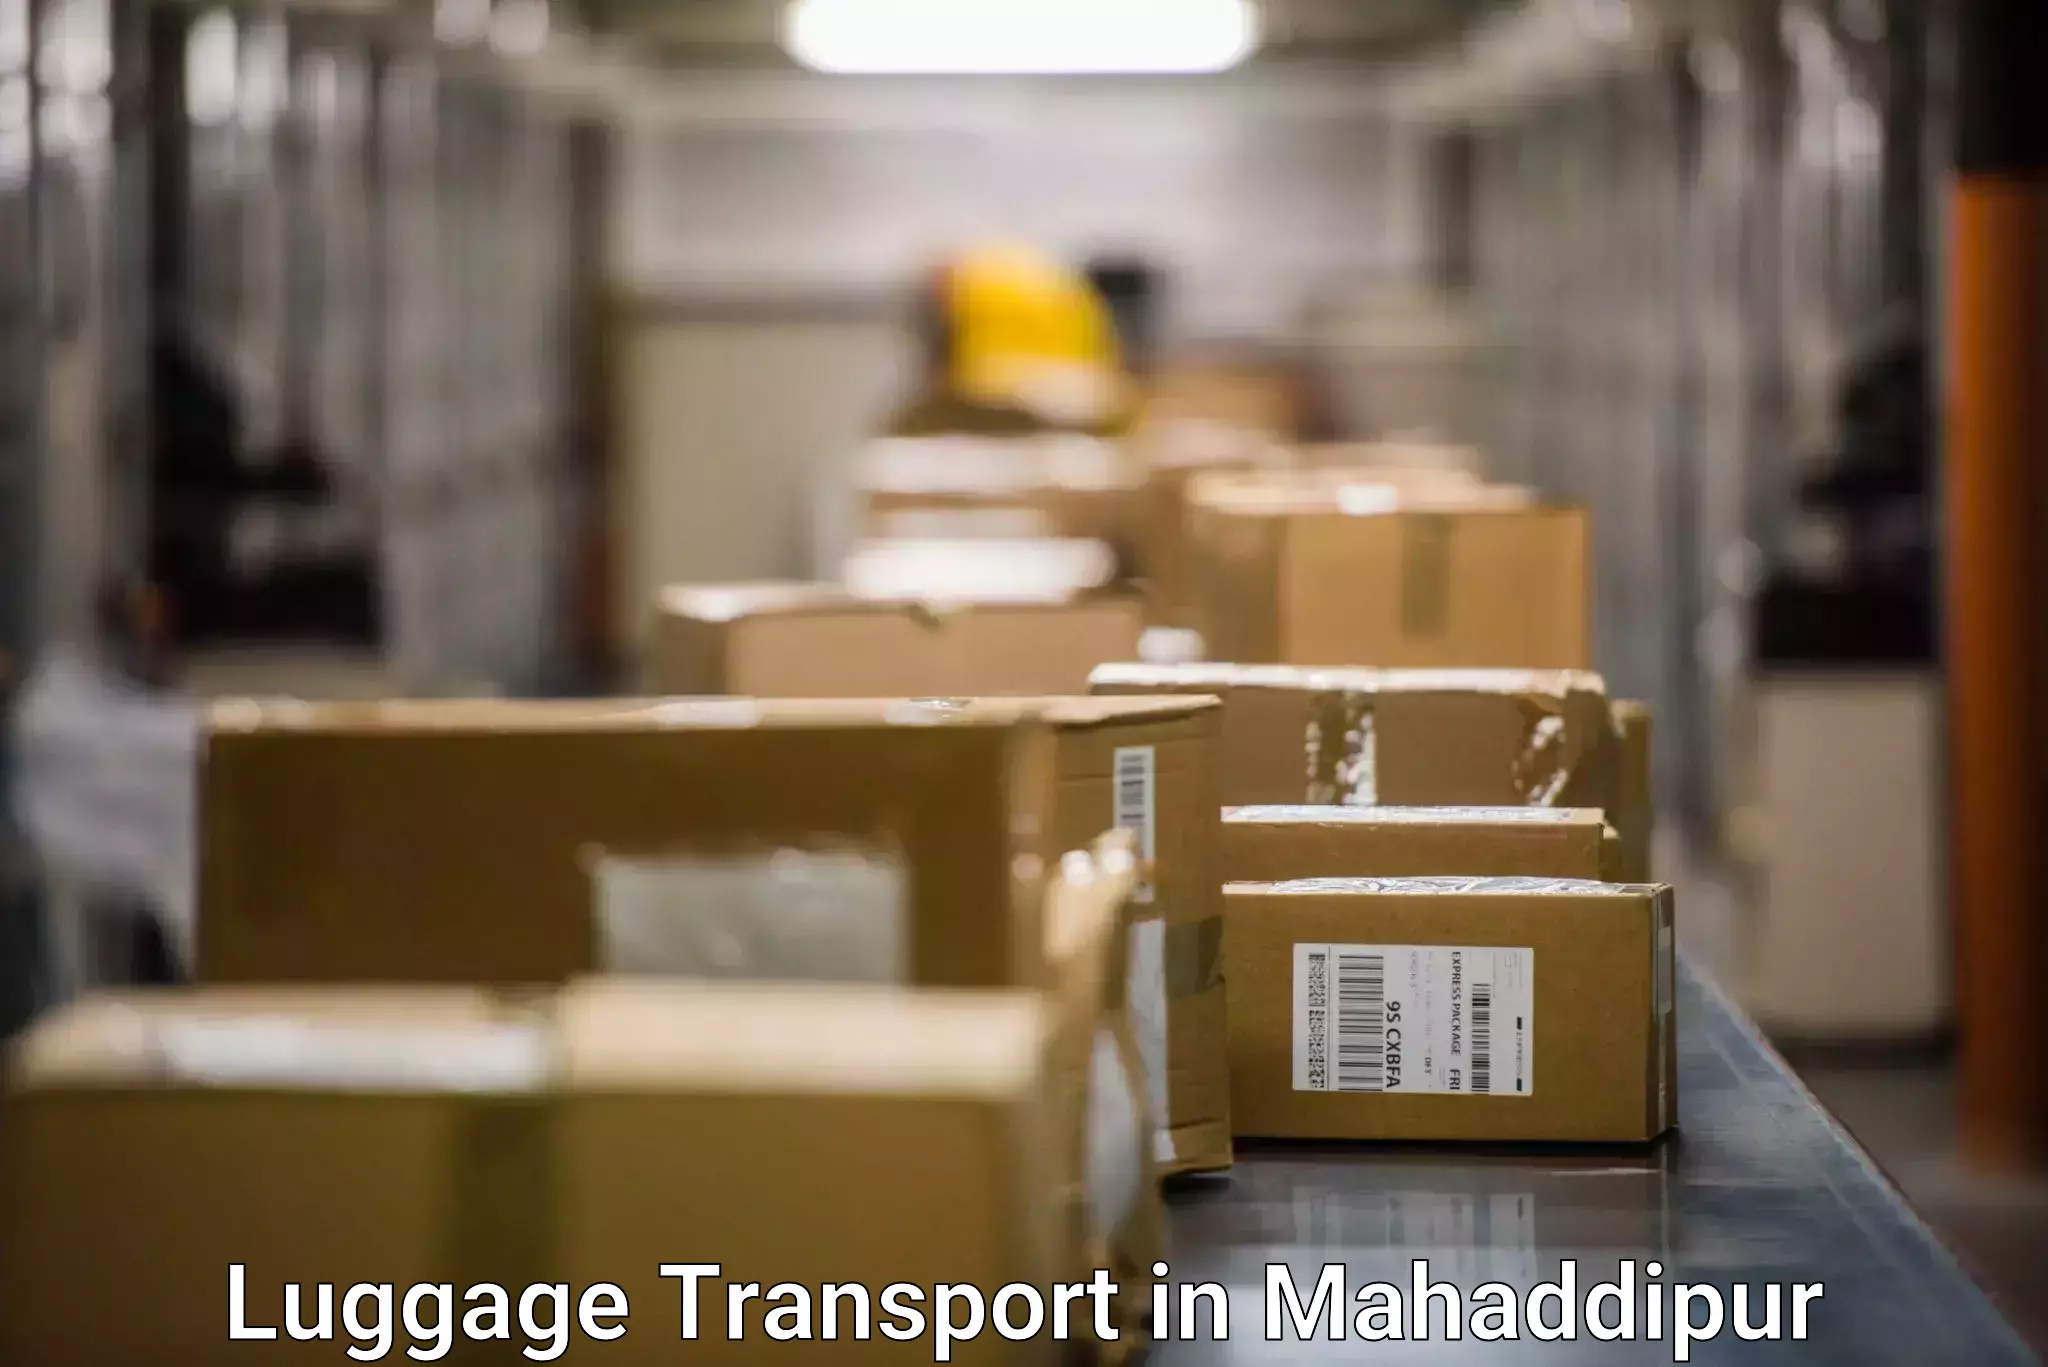 Urgent luggage shipment in Mahaddipur